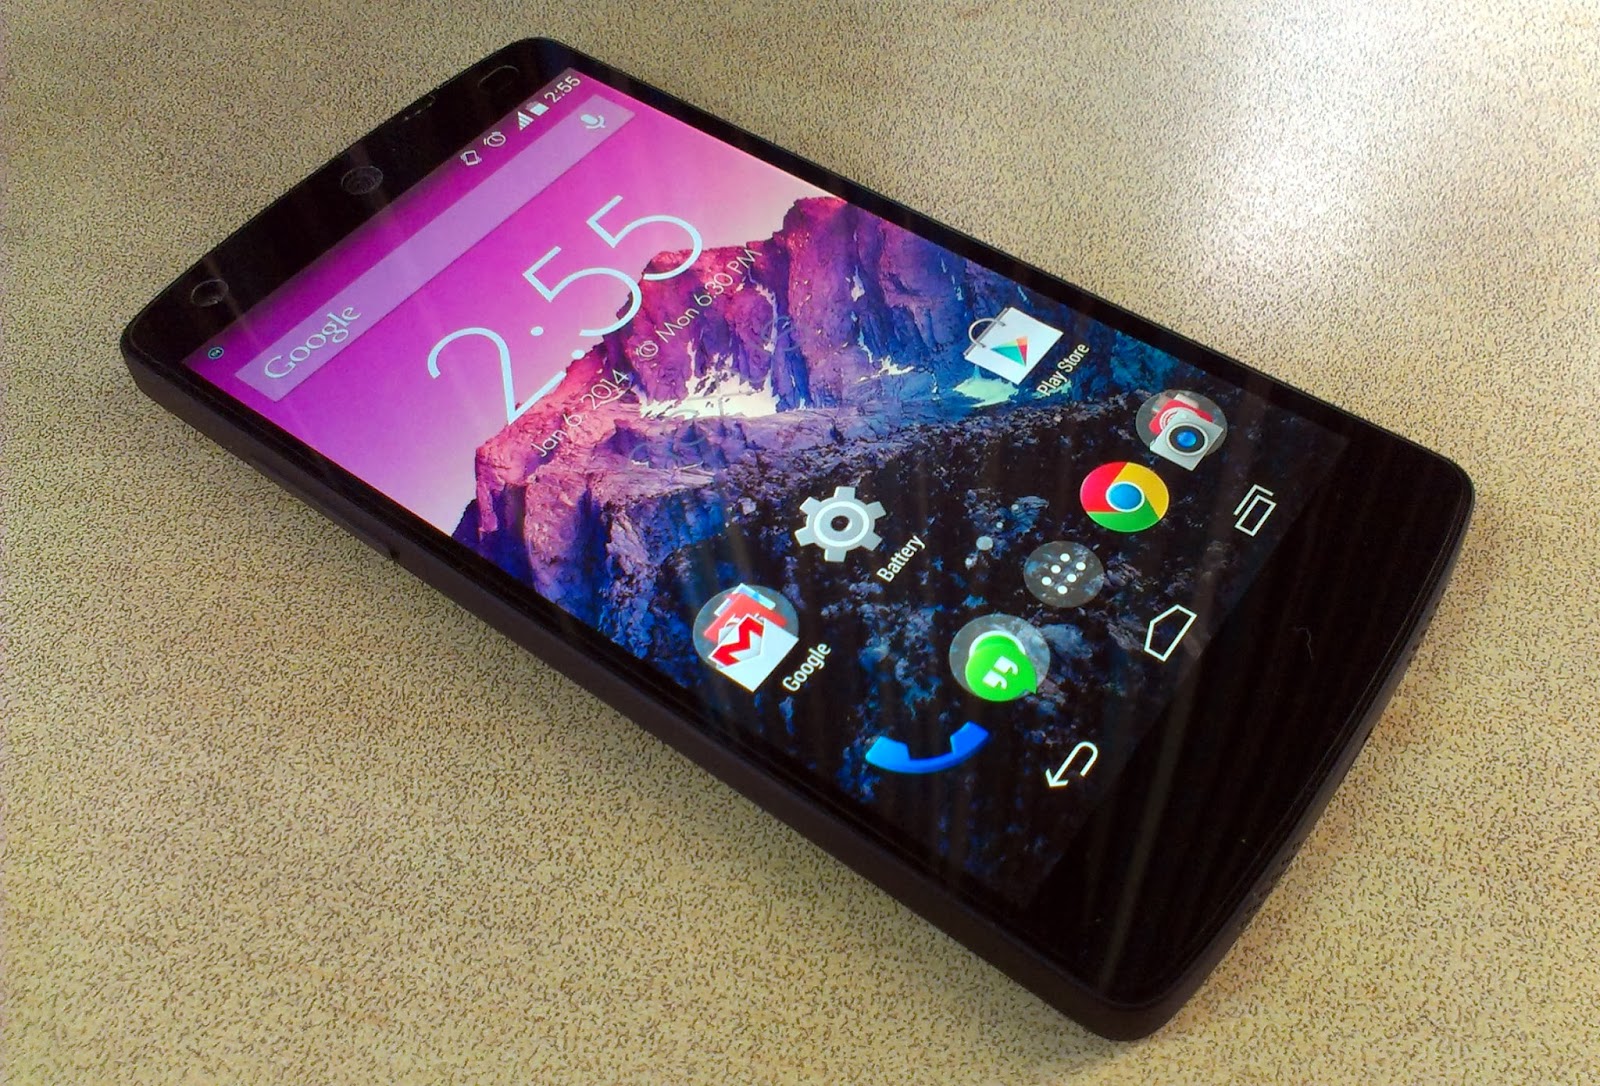 Google+LG+Nexus+5+Android+KitKat+Review+Handson+Detailed+Benchmark++%25282%2529.jpg